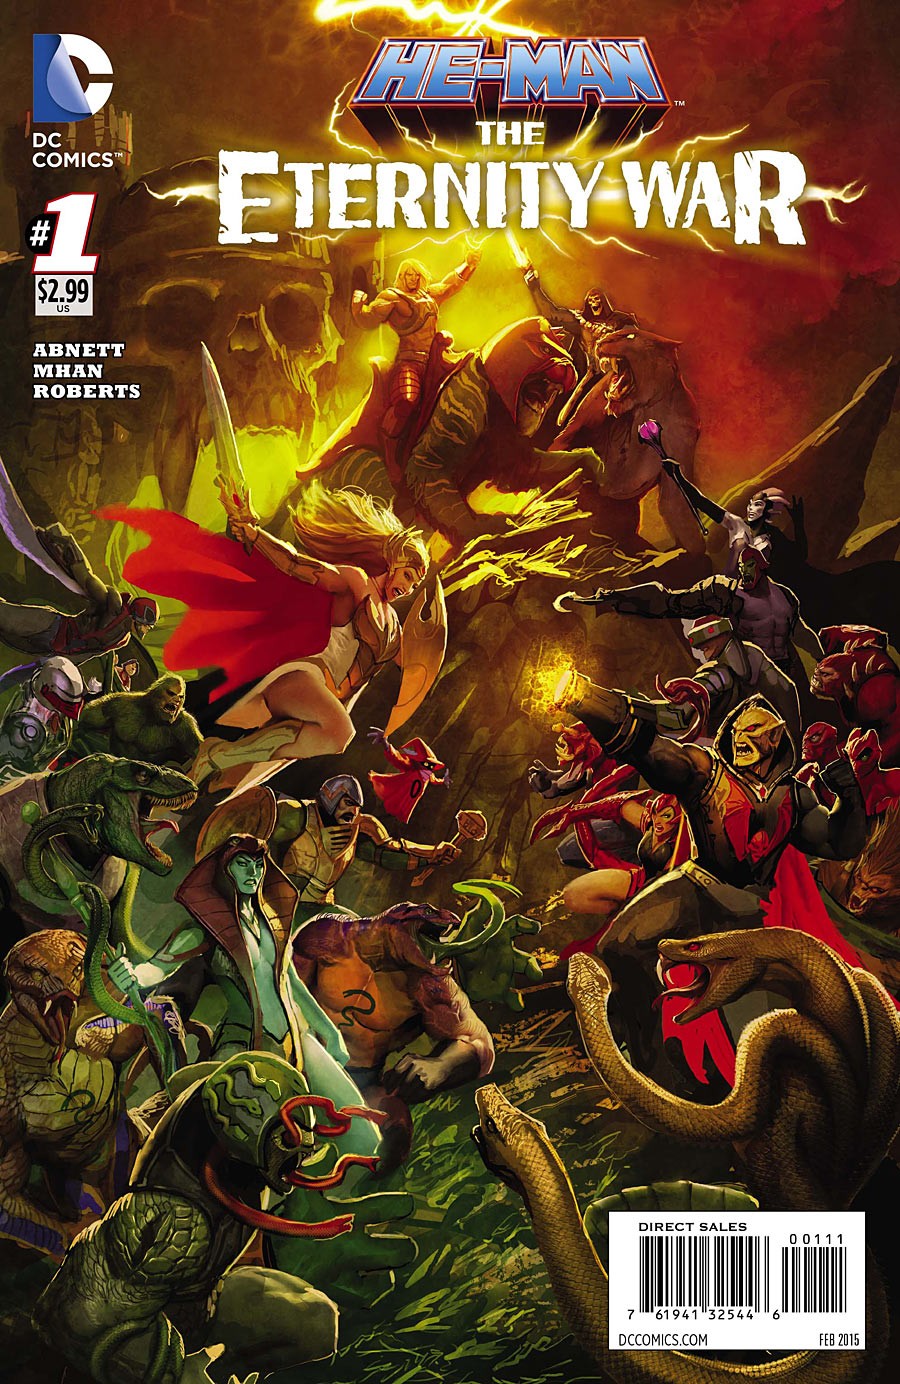 He-Man: The Eternity War Vol. 1 #1